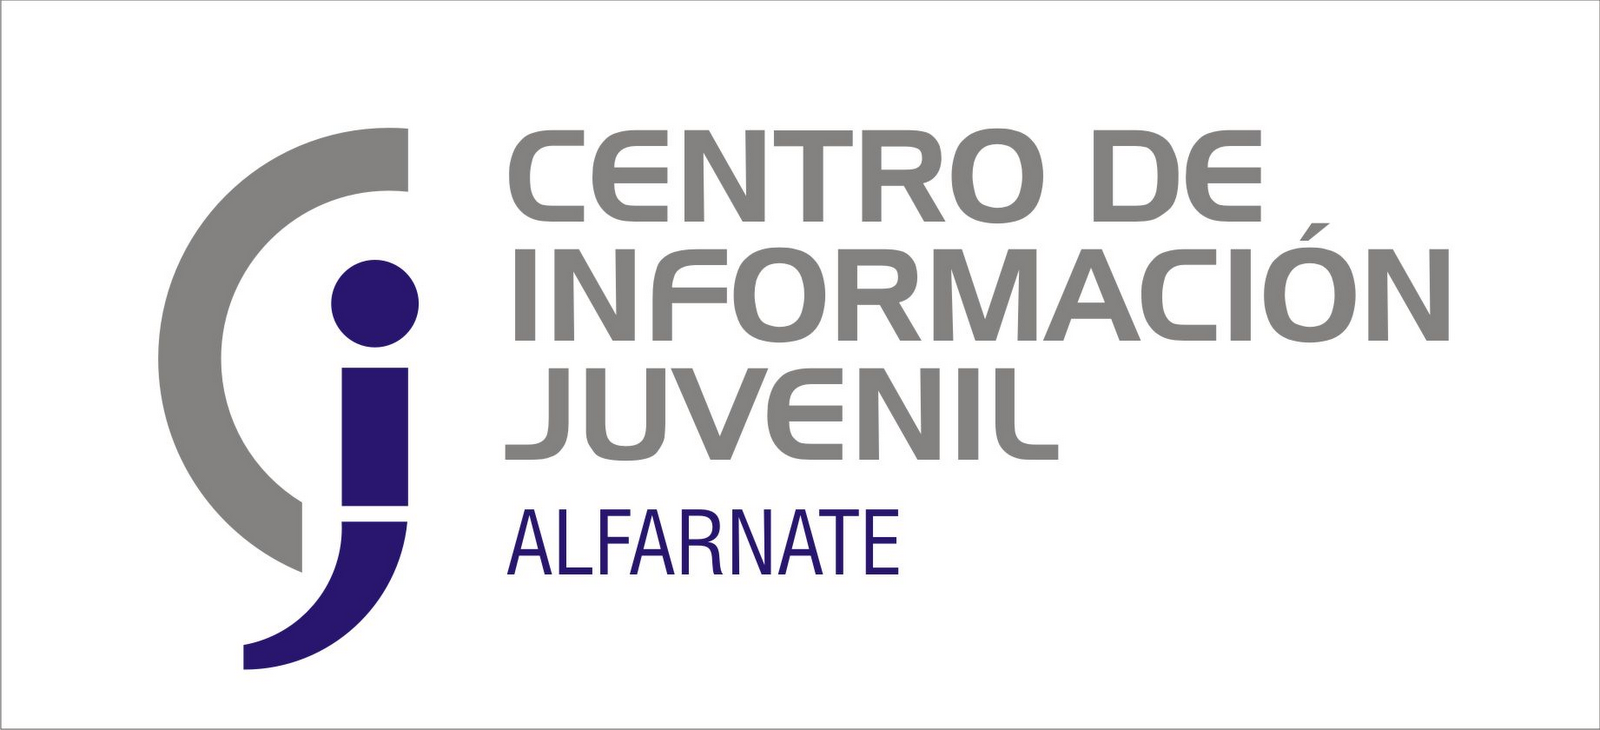 JUVENTUD DE ALFARNATE